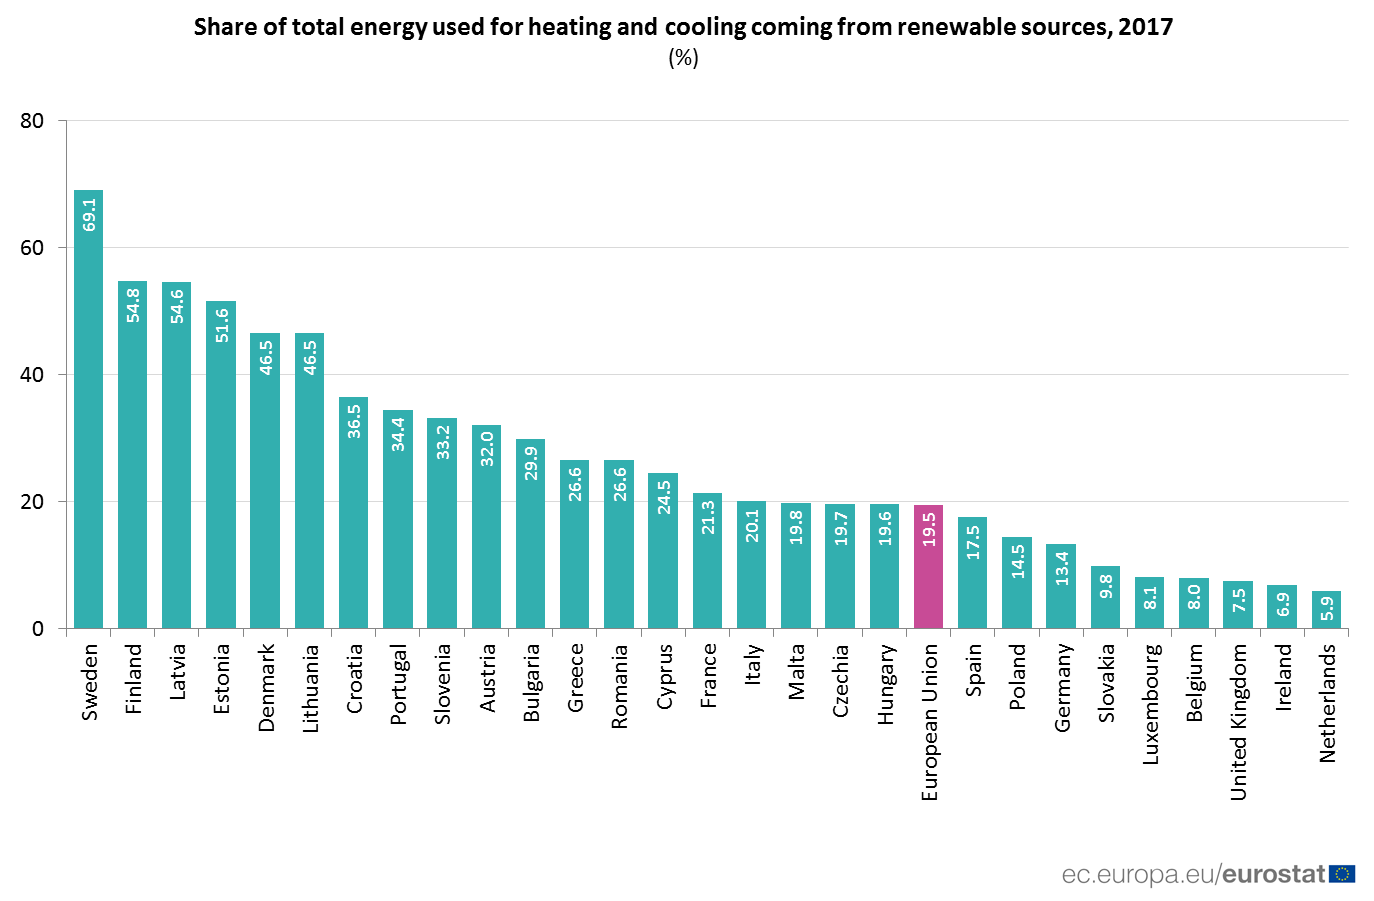 EU reports uneven spread of renewable energy despite overall increase